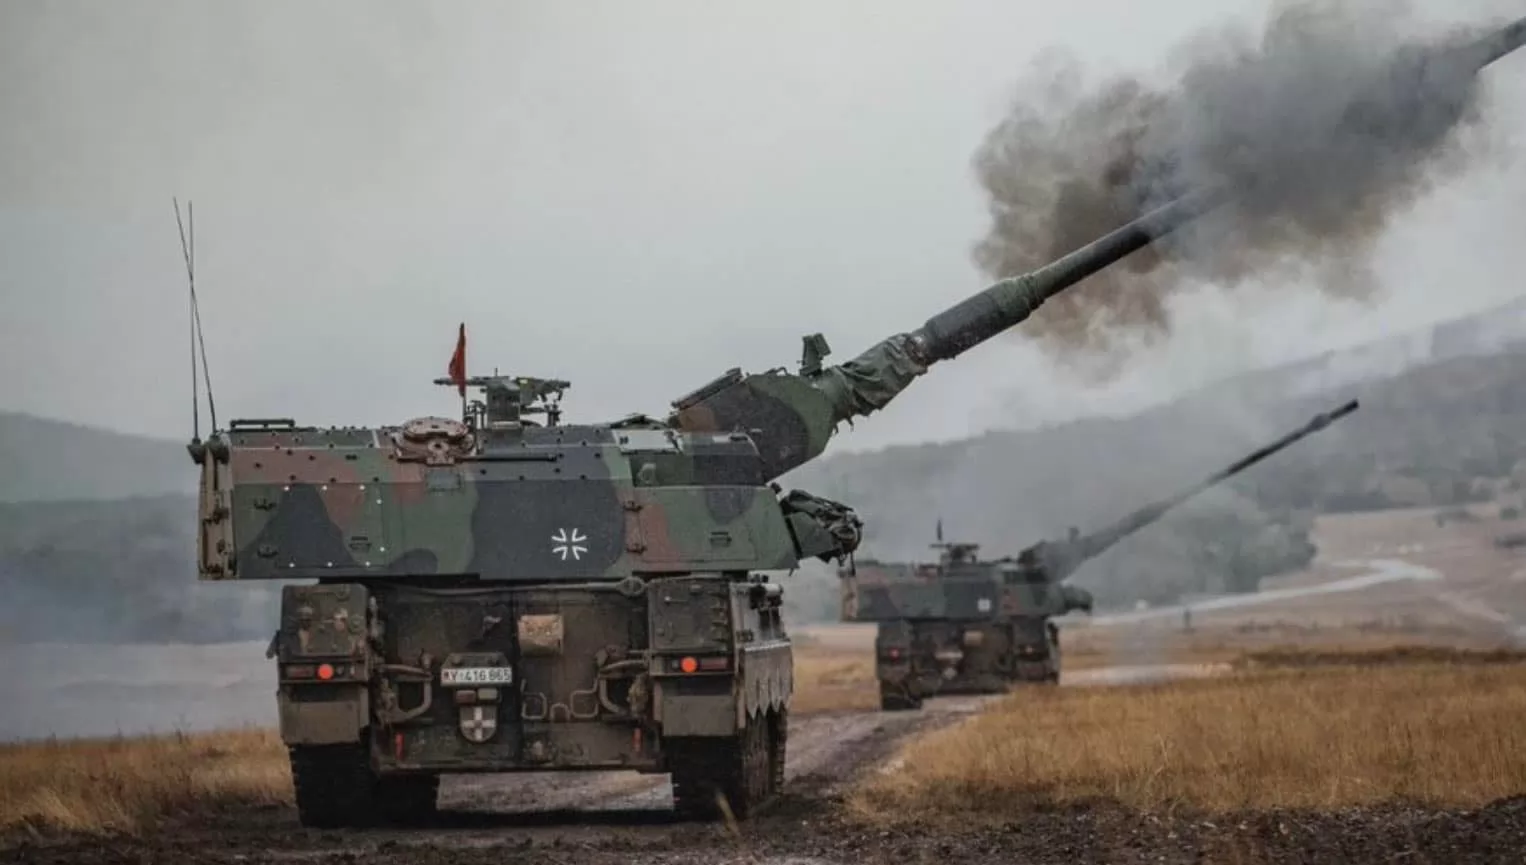 Panzerhaubitze 2000 destroys Russian equipment with a high-precision "smart" projectile SMArt 155 (video)